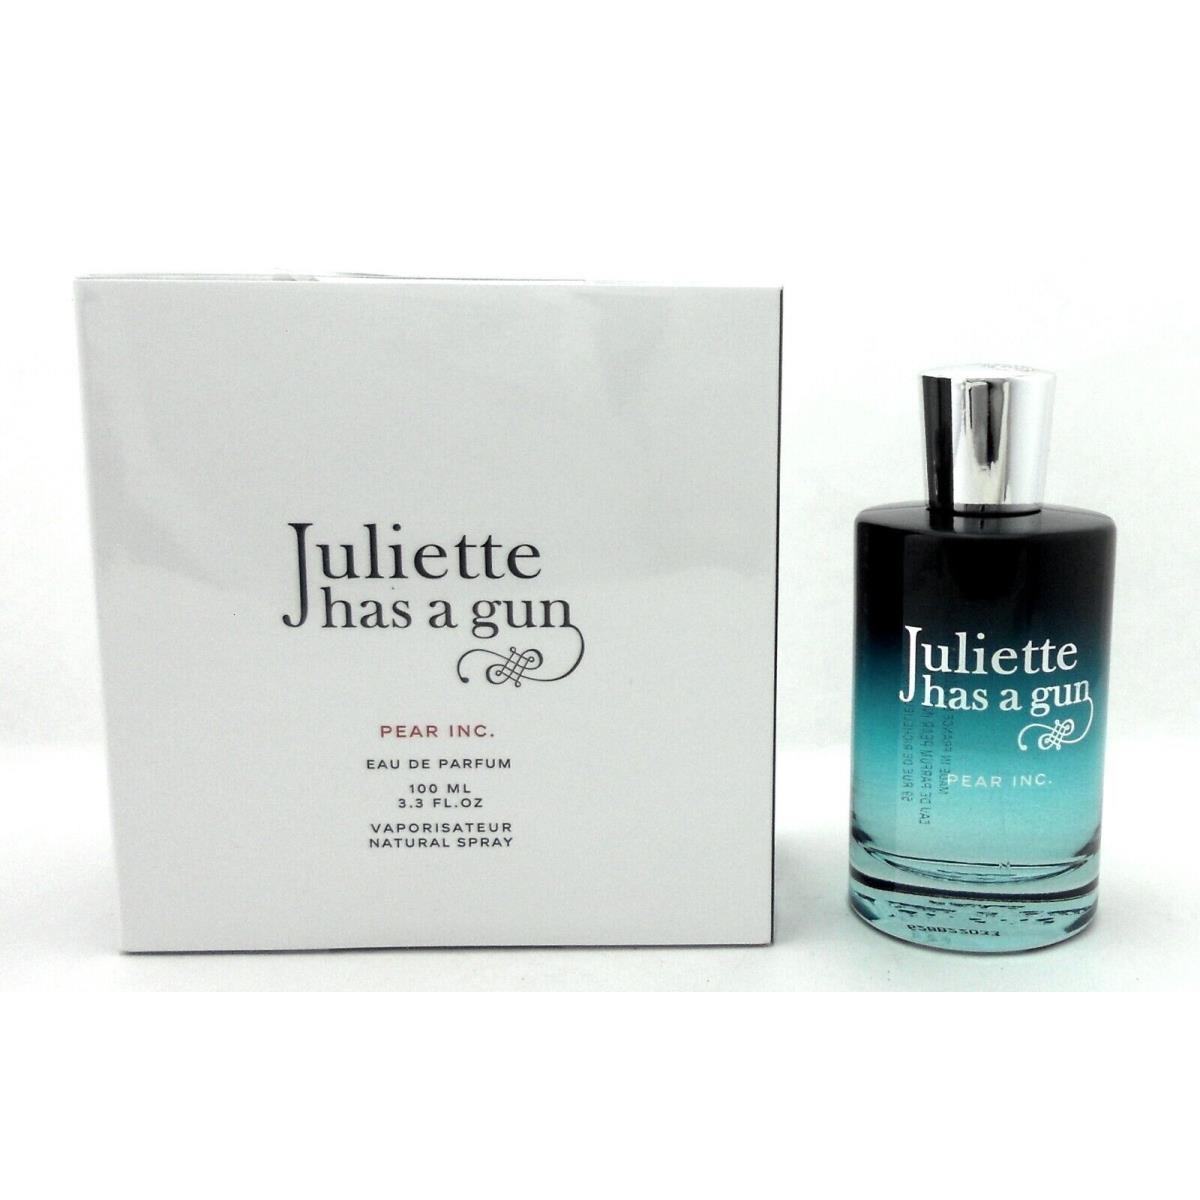 Juliette Has a Gun Pear Inc. 3.3 Oz. Eau de Parfum Spray